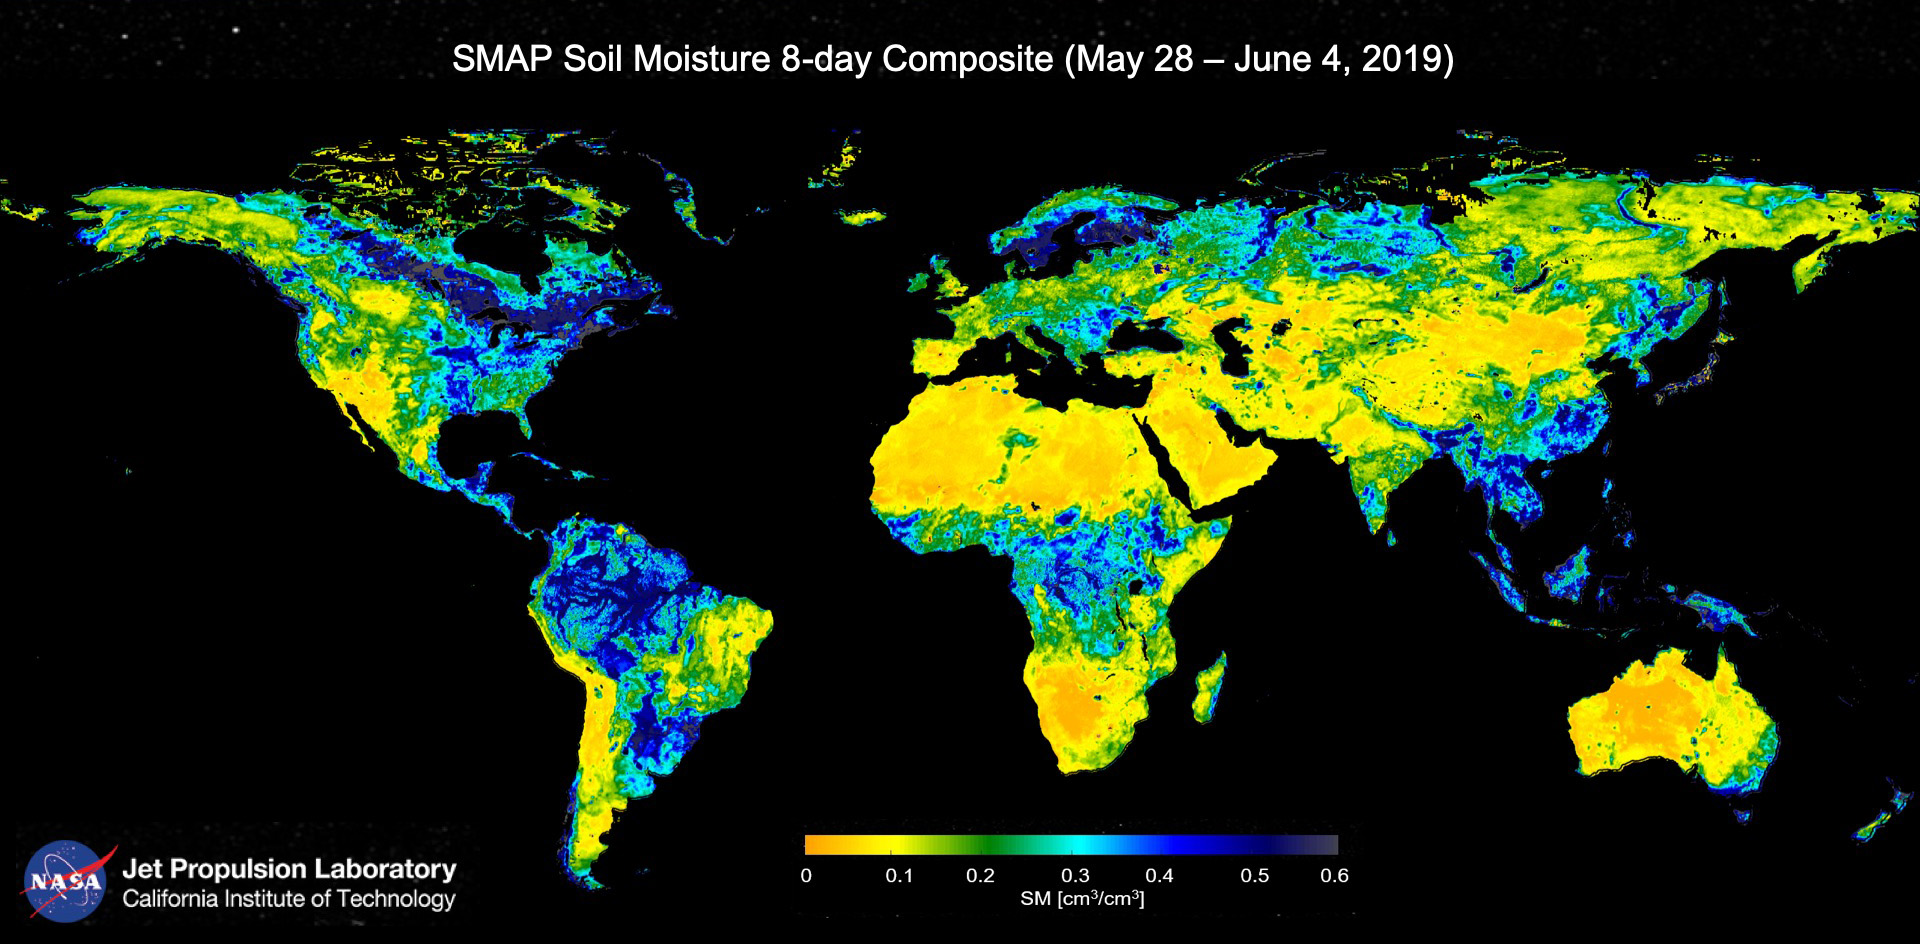 SMAP observations on global moisture. Source: NASA/NSIDC (2019)